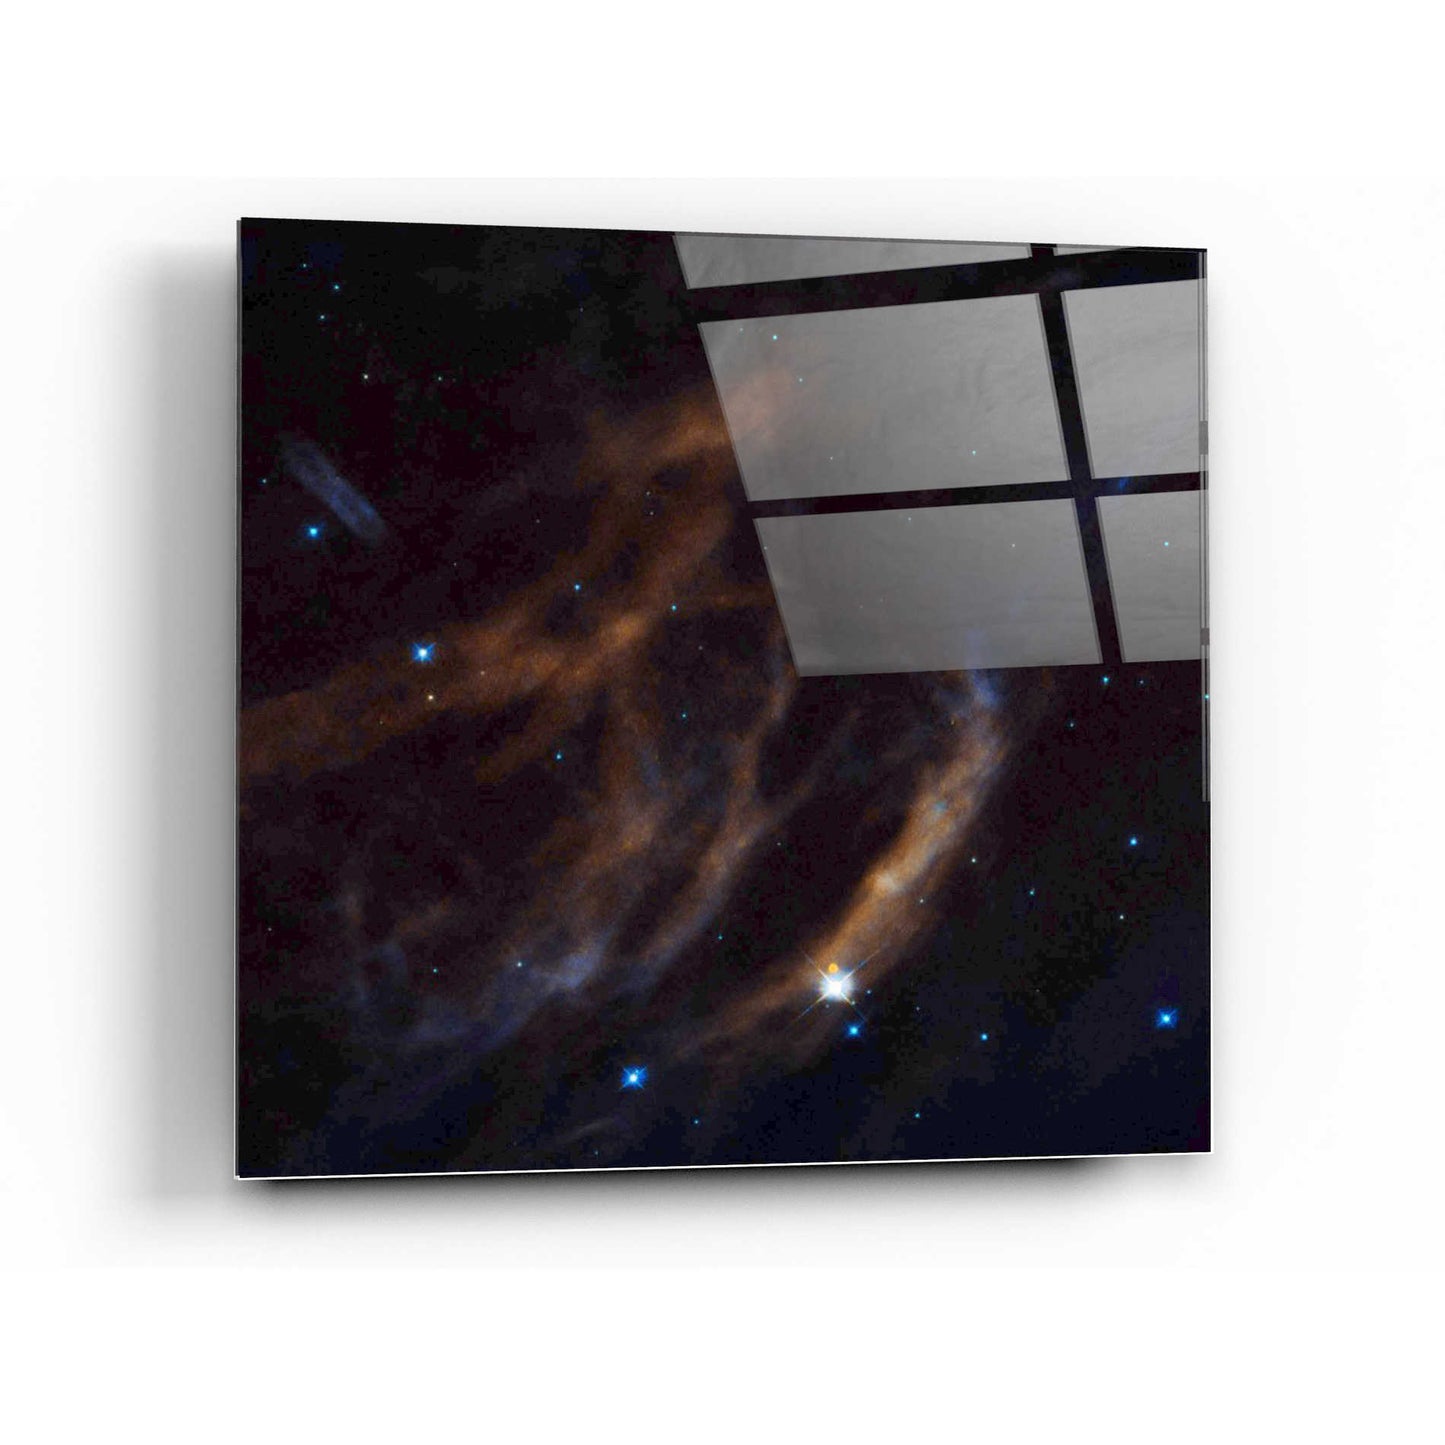 Epic Art "Within Canis Majoris" Hubble Space Telescope Acrylic Glass Wall Art,24x24